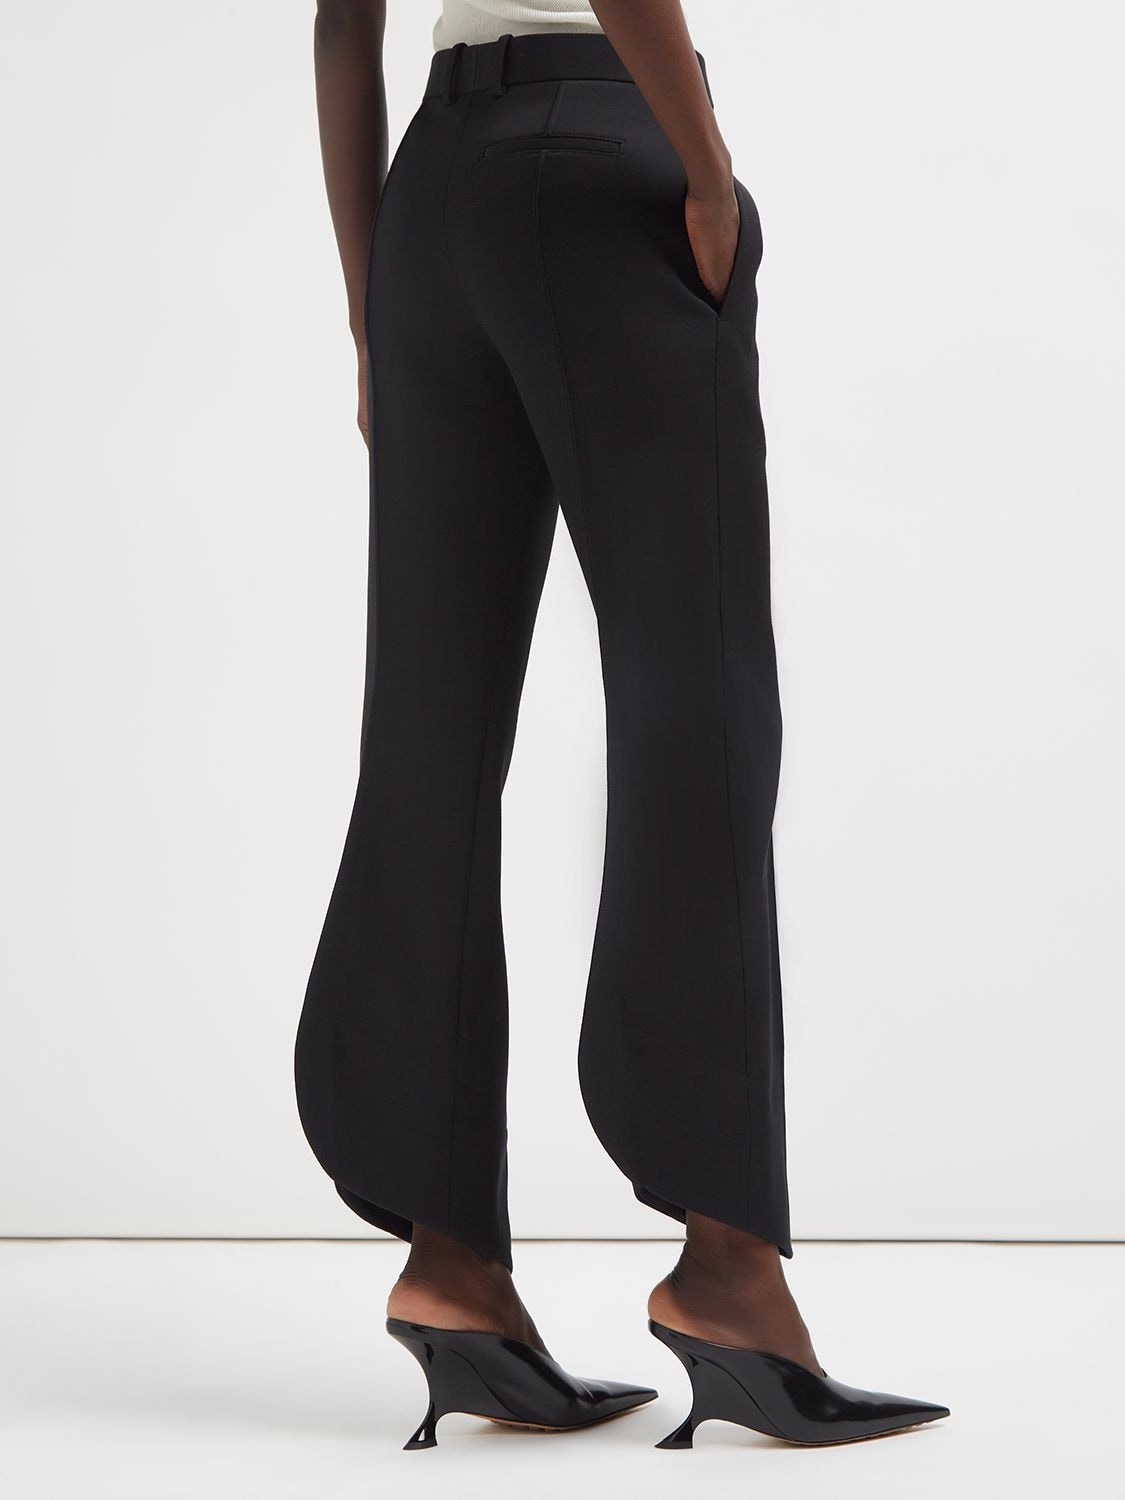 Bottega Veneta® Women's Curved Shape Wool Pants in Black. Shop online now.